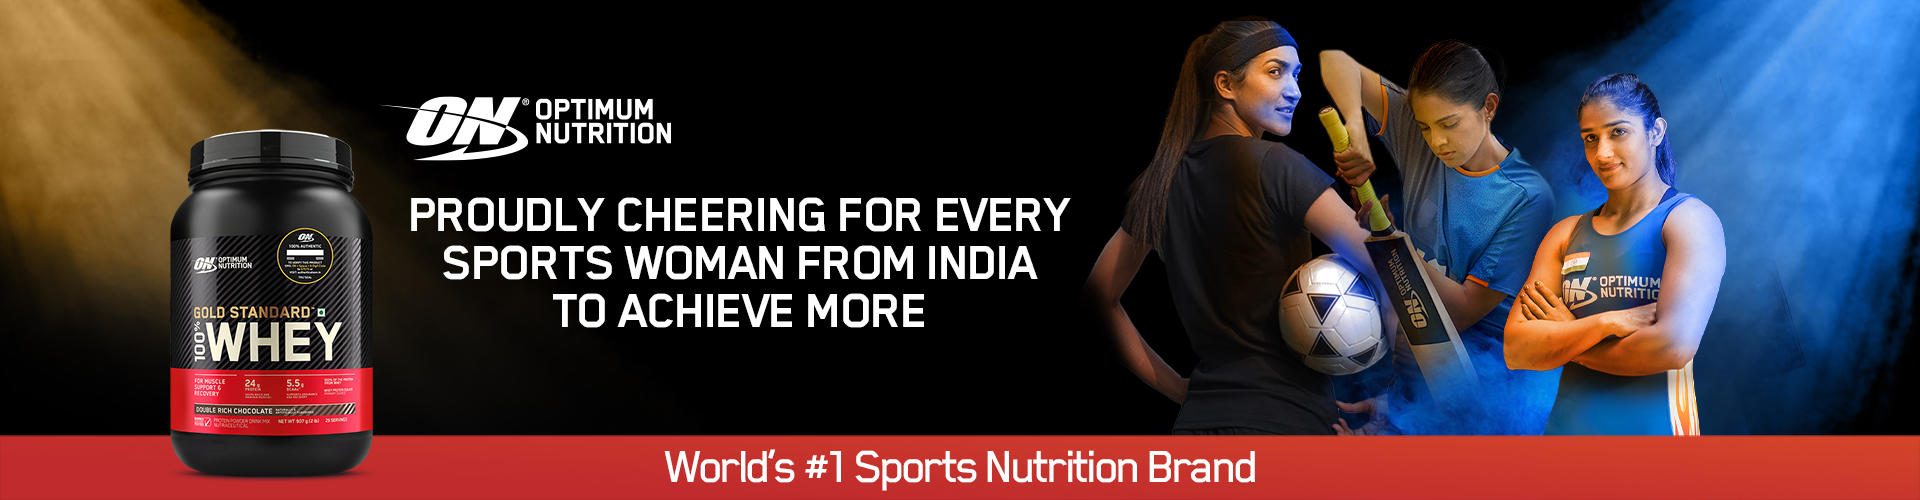 Optimimum Nutrition - World's #1Sports Nutrition Brand